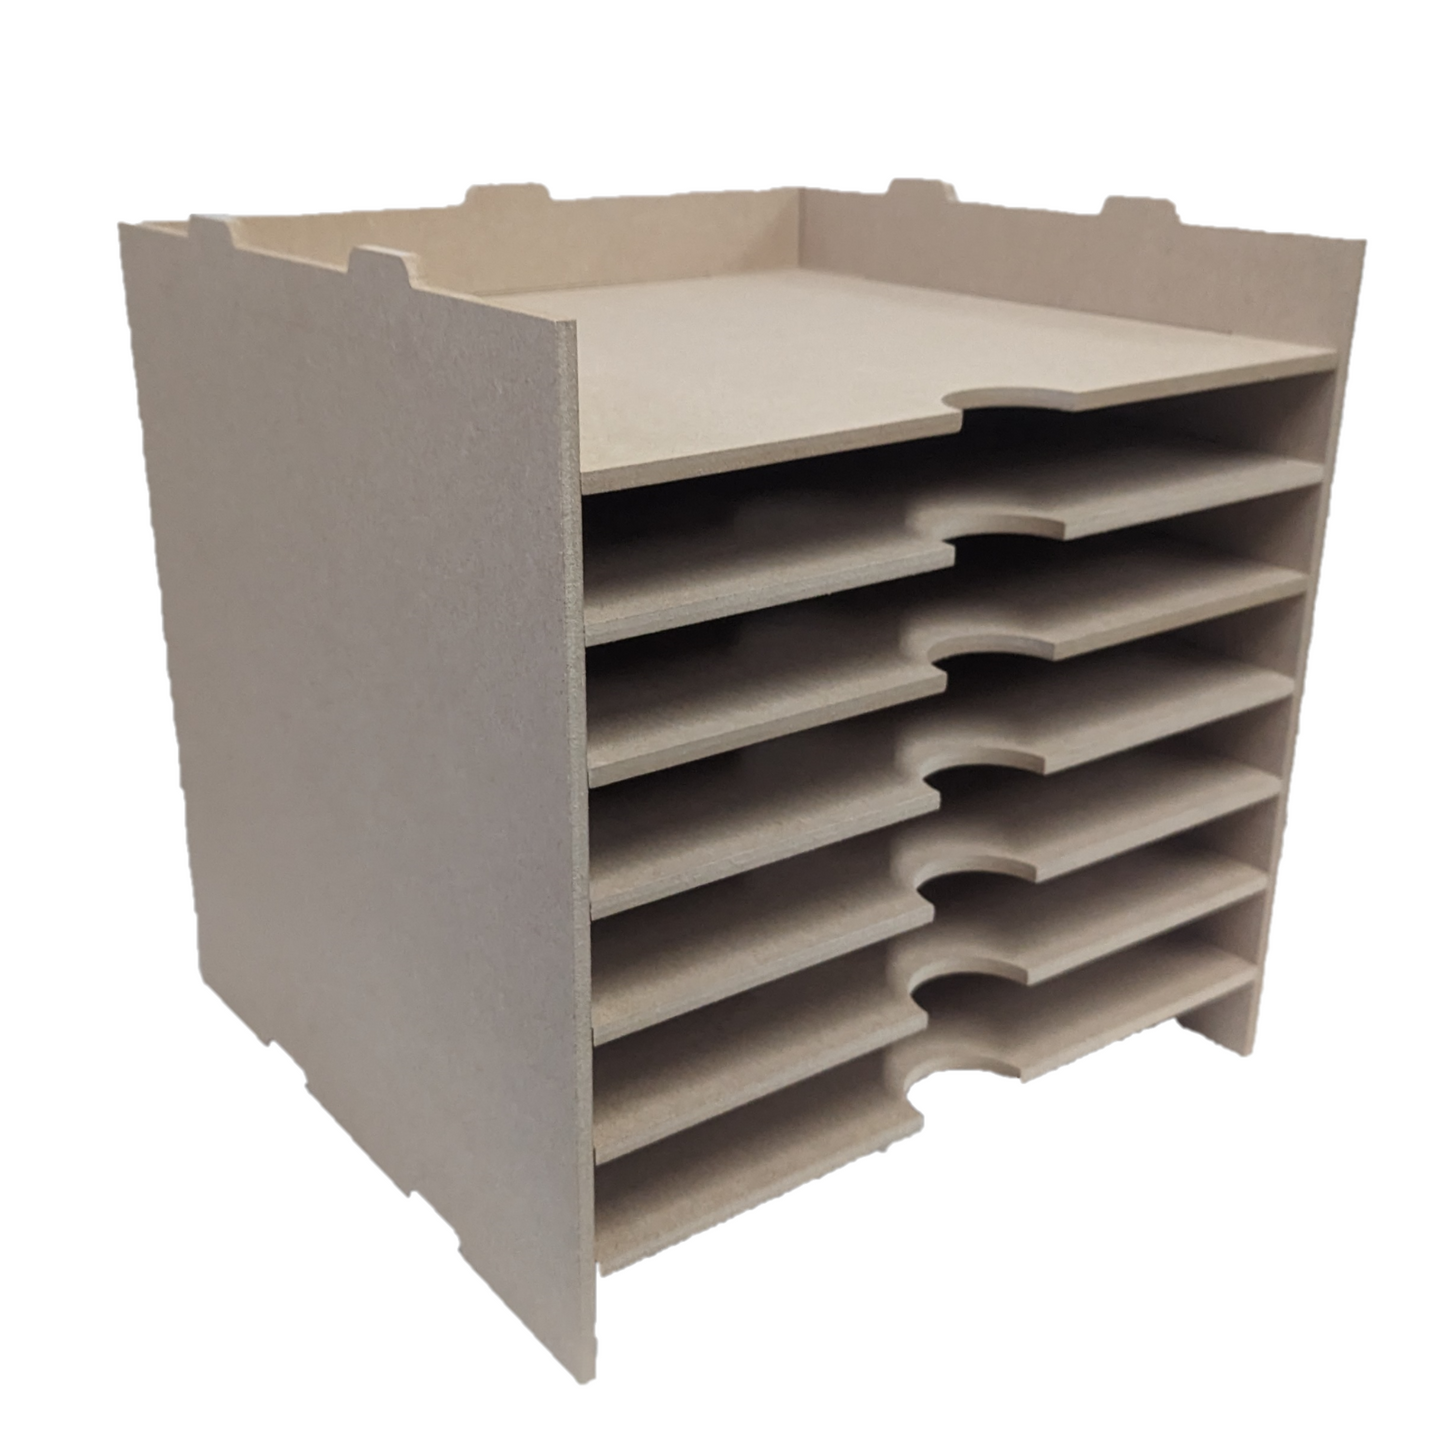 12 x 12'' Inch Paper Storage Unit for Craft etc fits Ikea Kallax cube storage